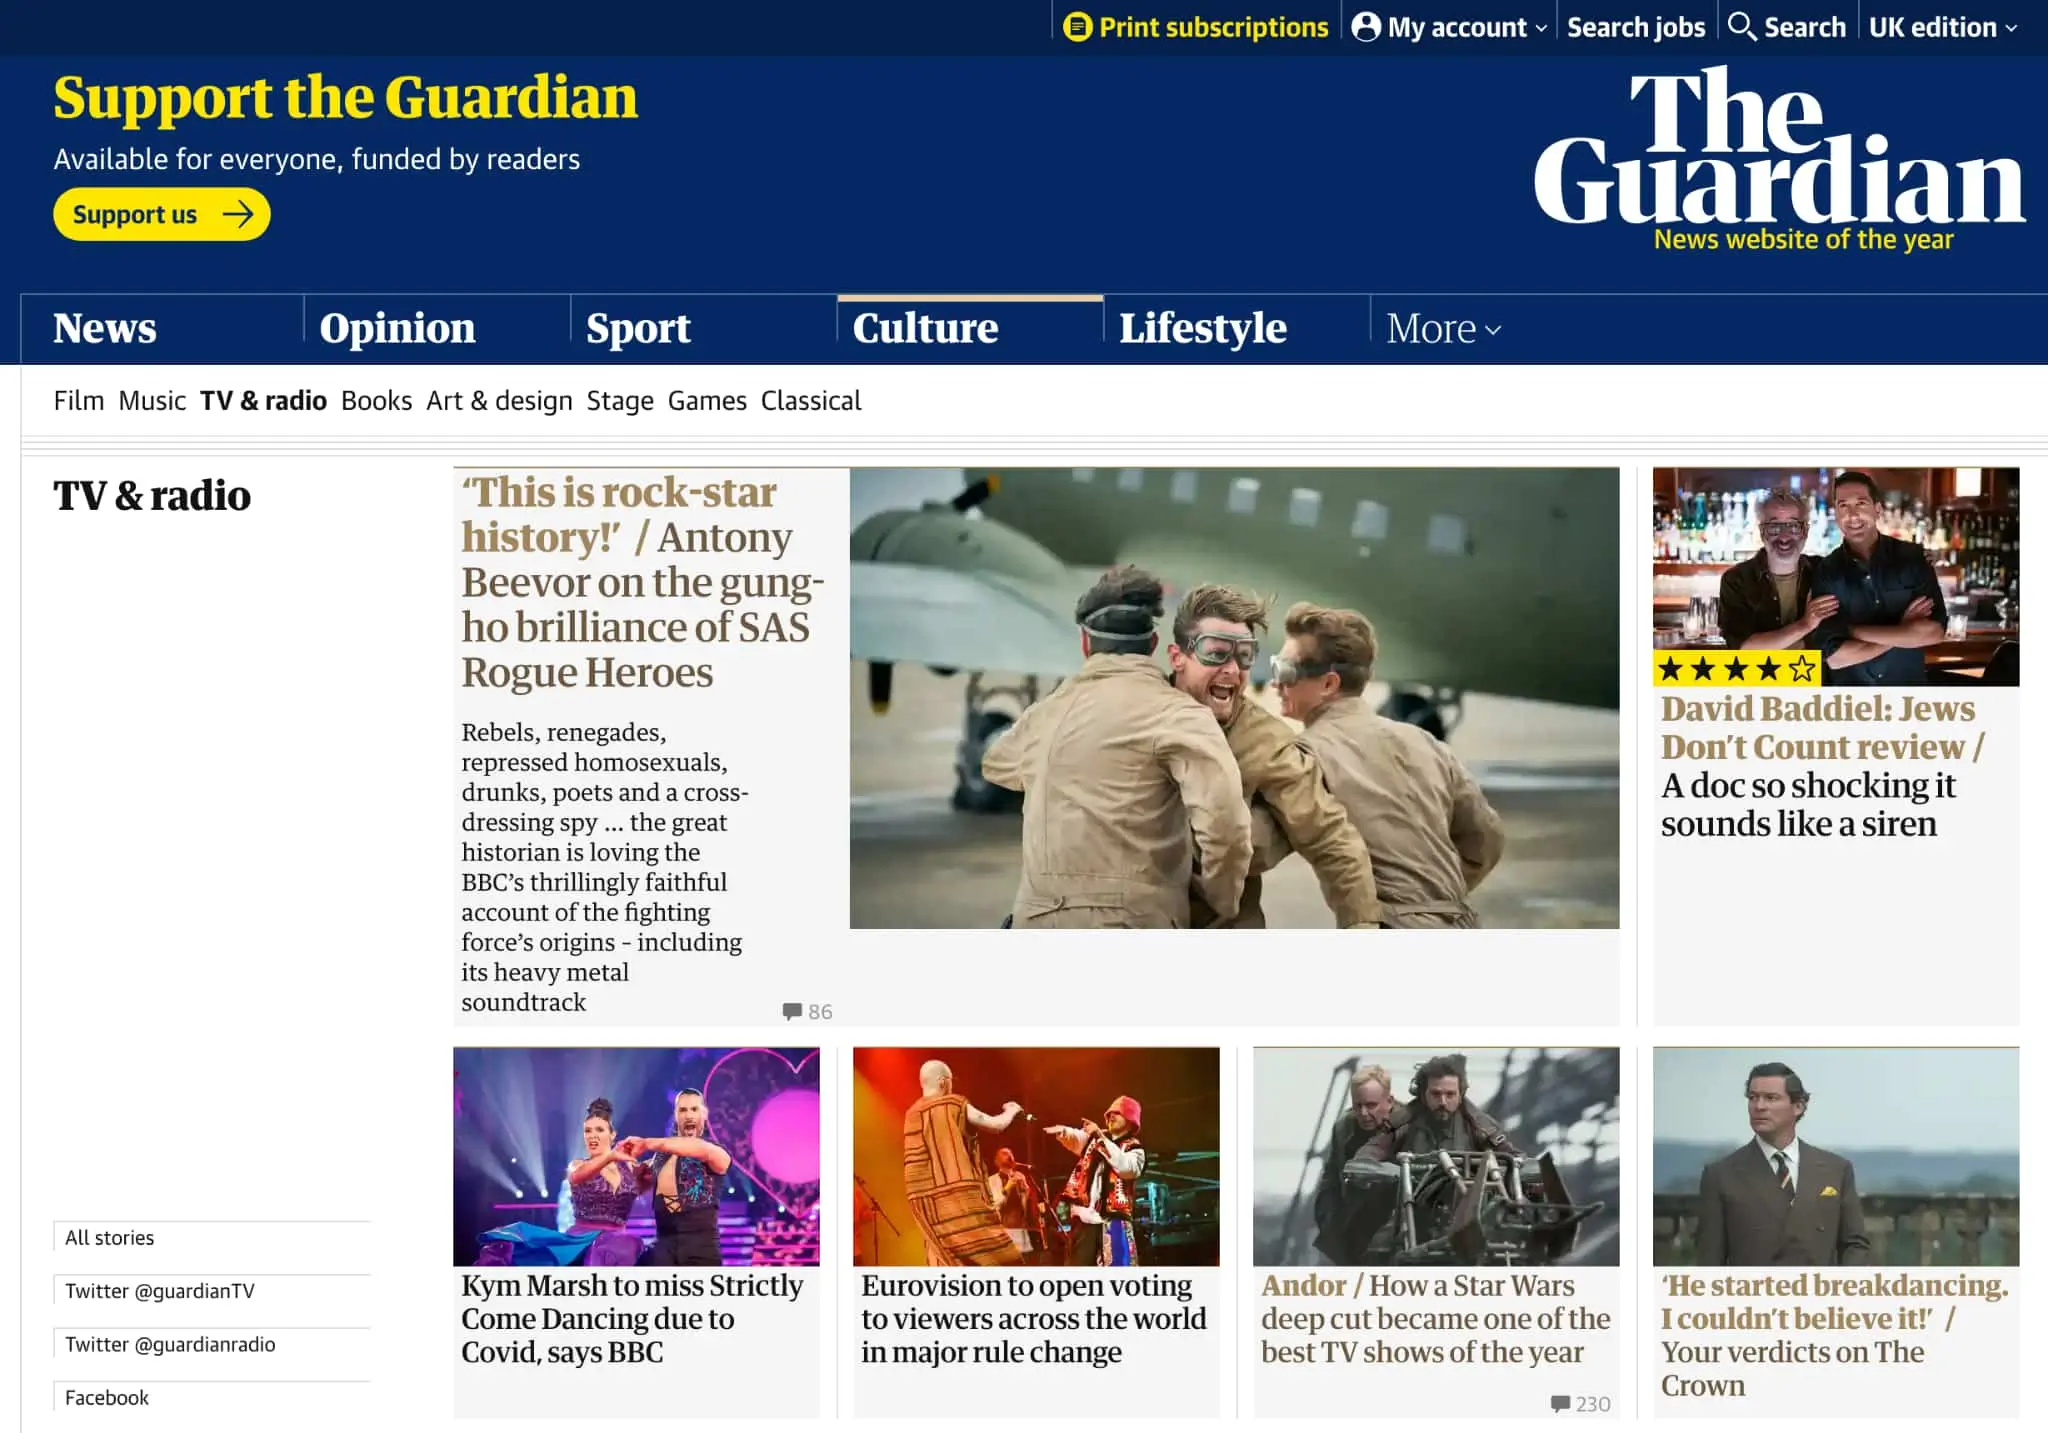 guardian website as an example of UI breadcrumbs